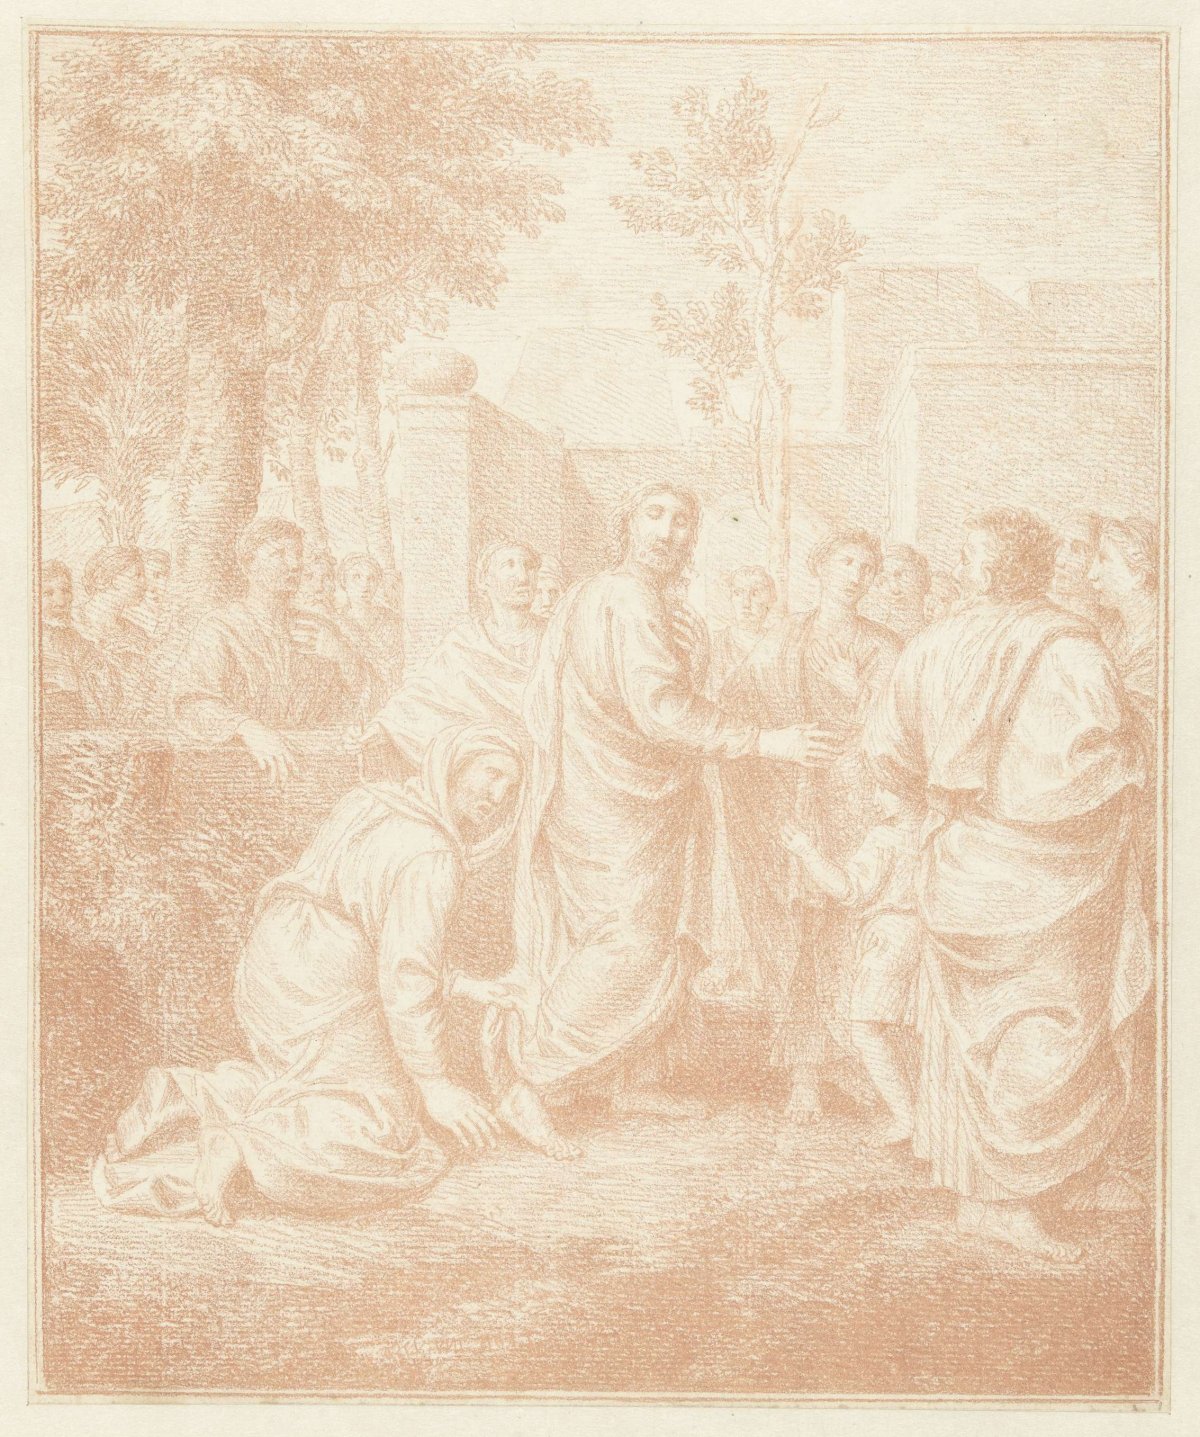 Kneeling woman grasps mantle of Christ, Louis Fabritius Dubourg, 1703 - 1775